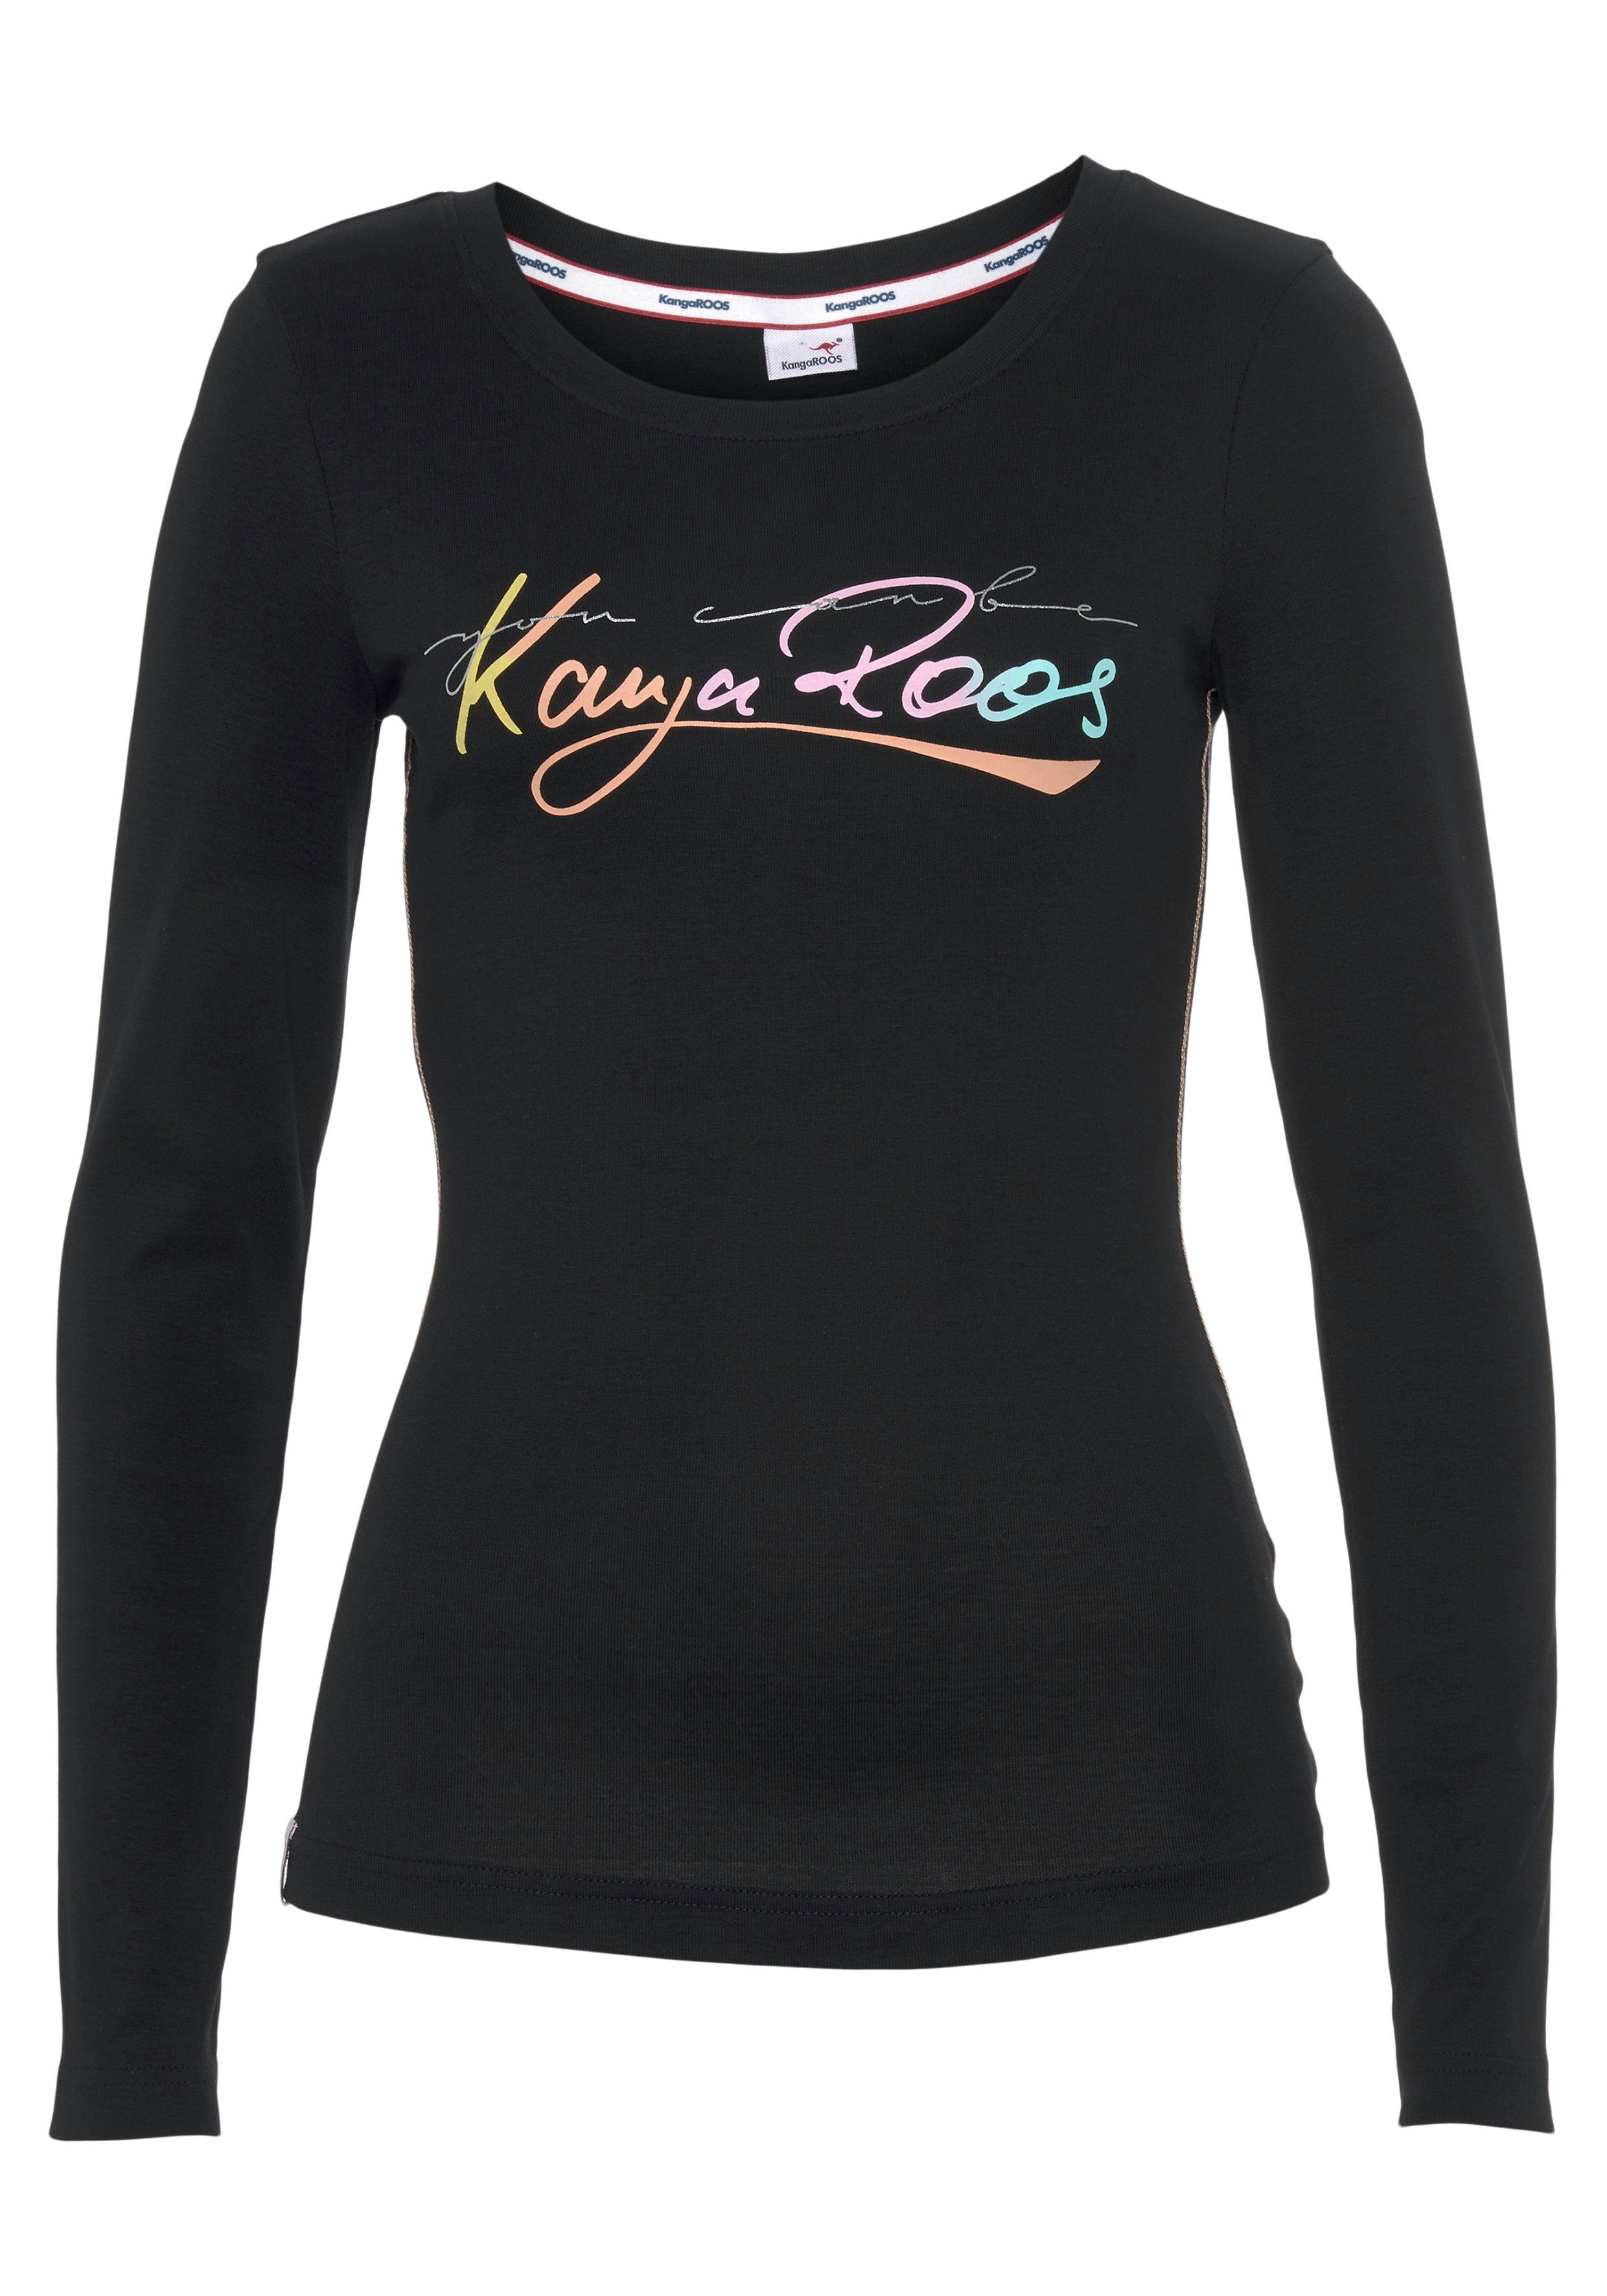 farbigen trendig mit schwarz - Langarmshirt KOLLEKTION NEUE Logoschriftzug KangaROOS